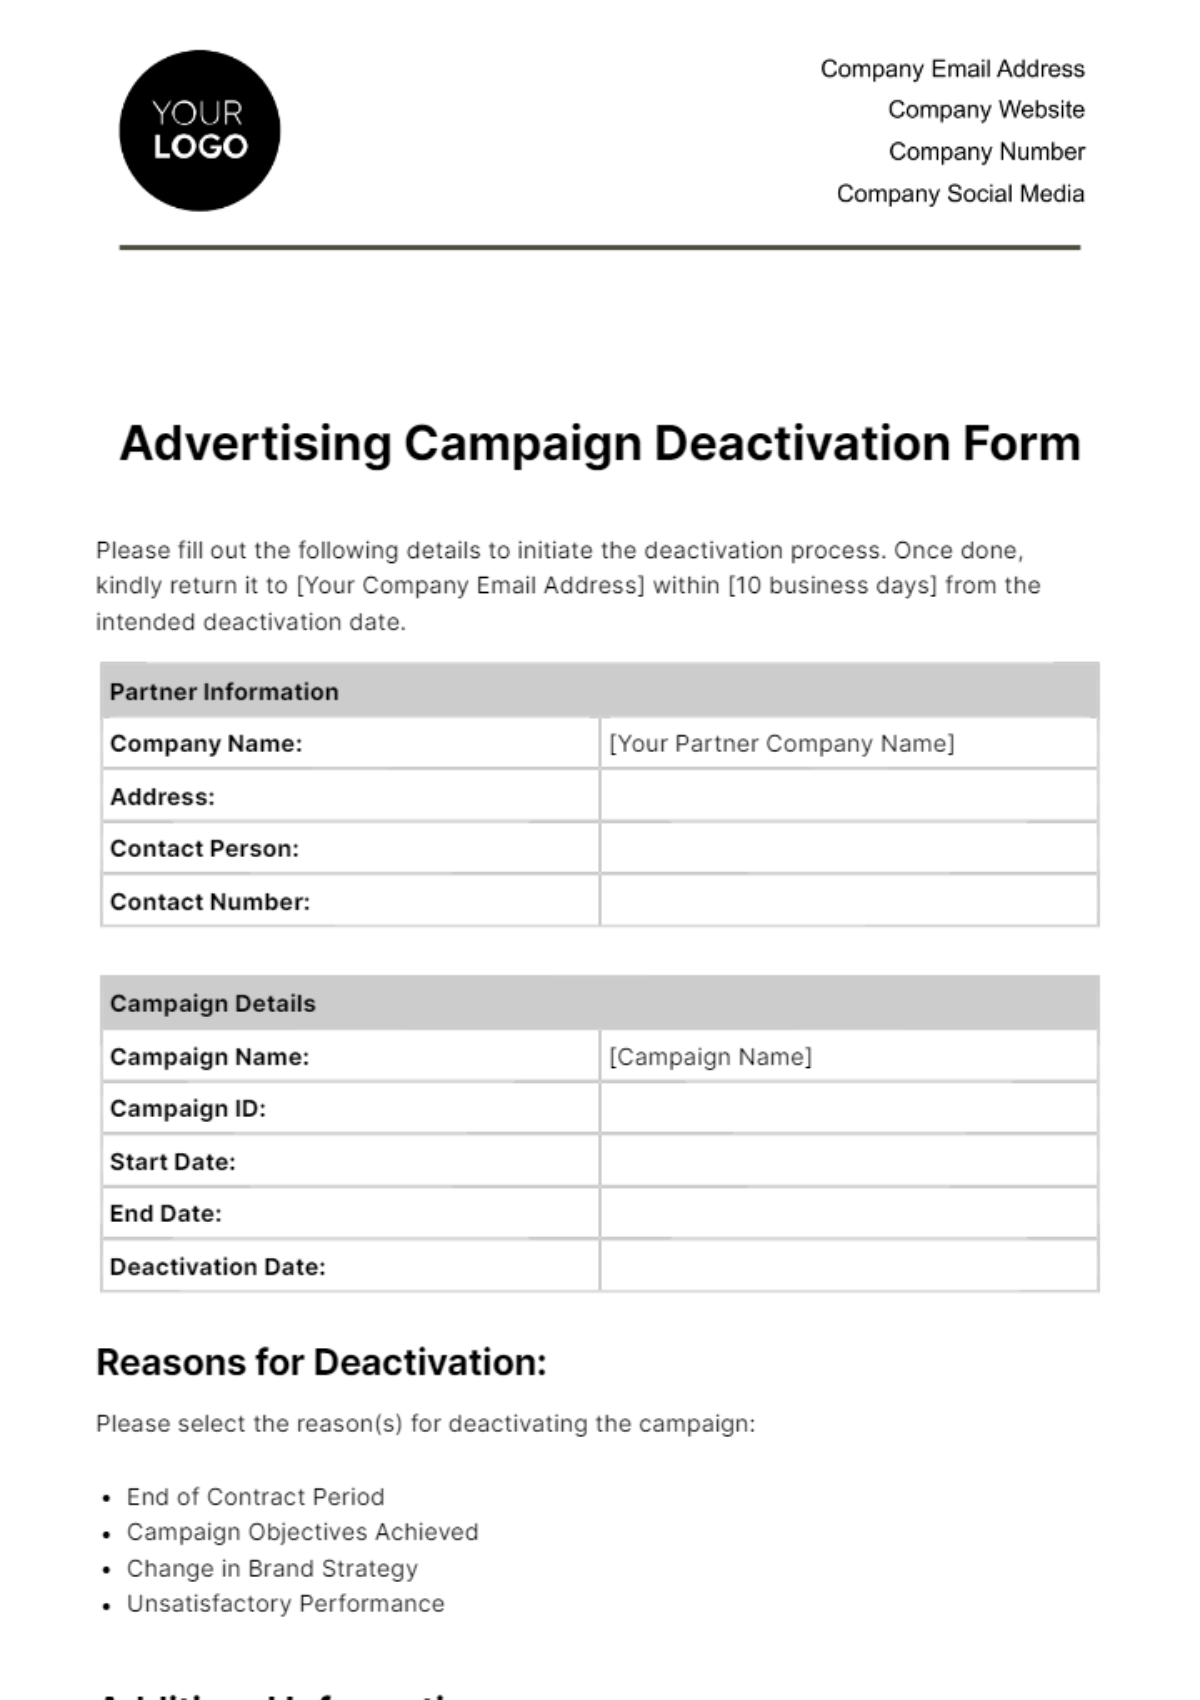 Advertising Campaign Deactivation Form Template